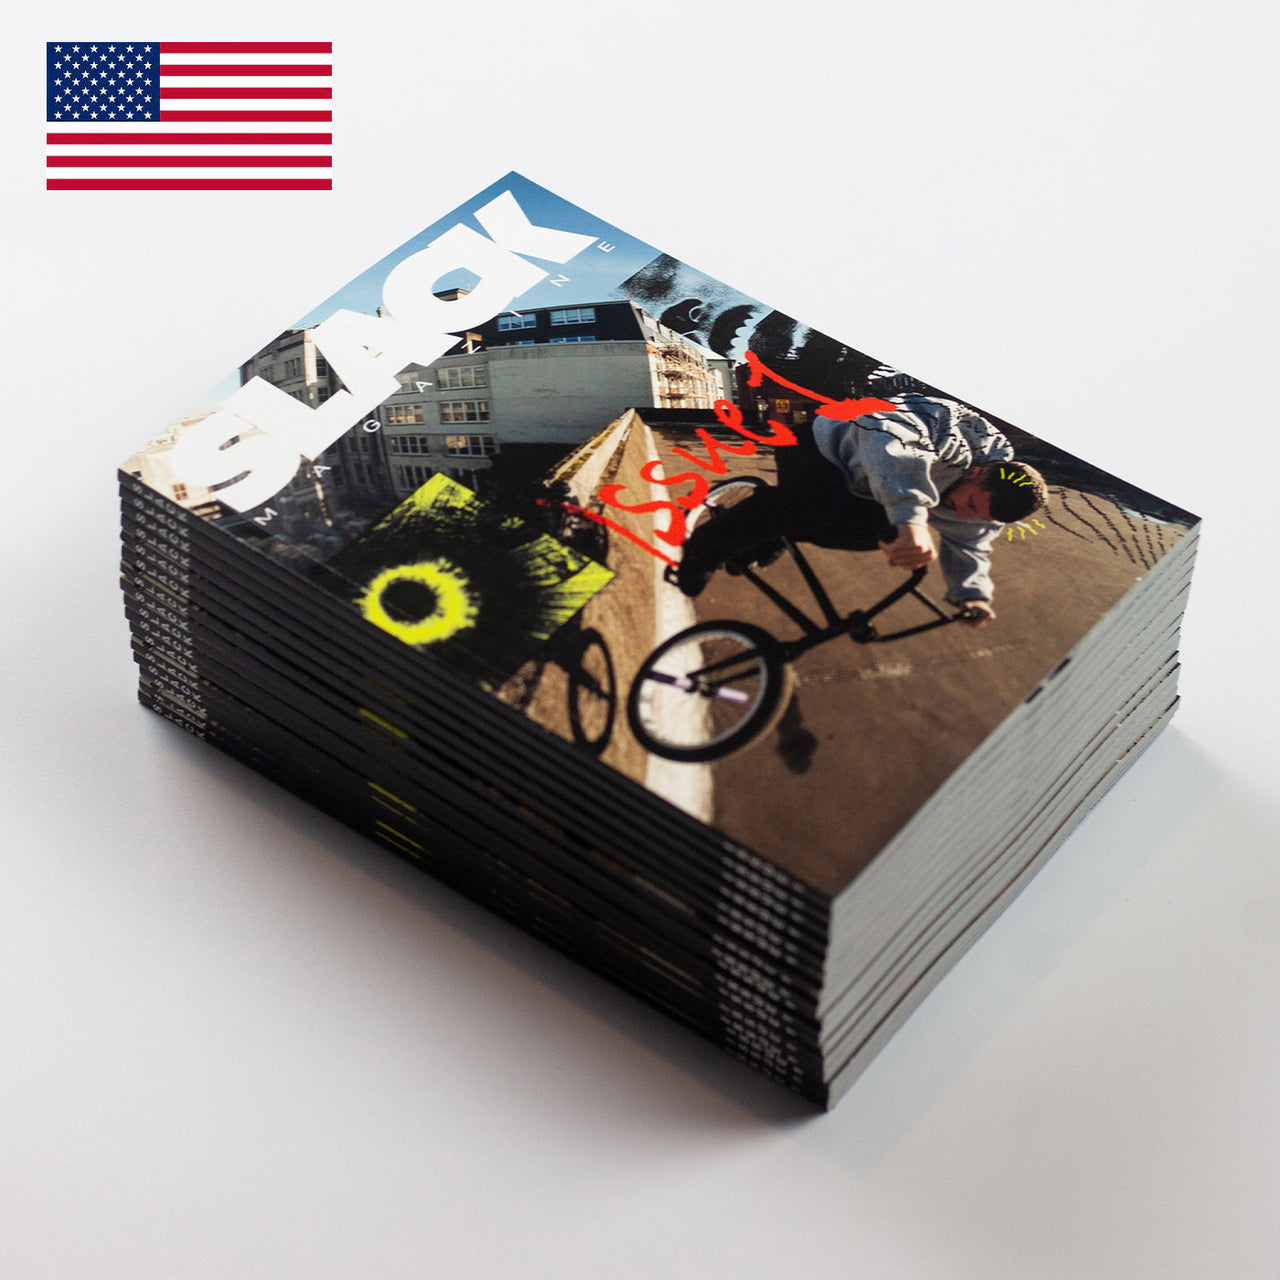 Slack Issue 1 "Shop Box" (USA)